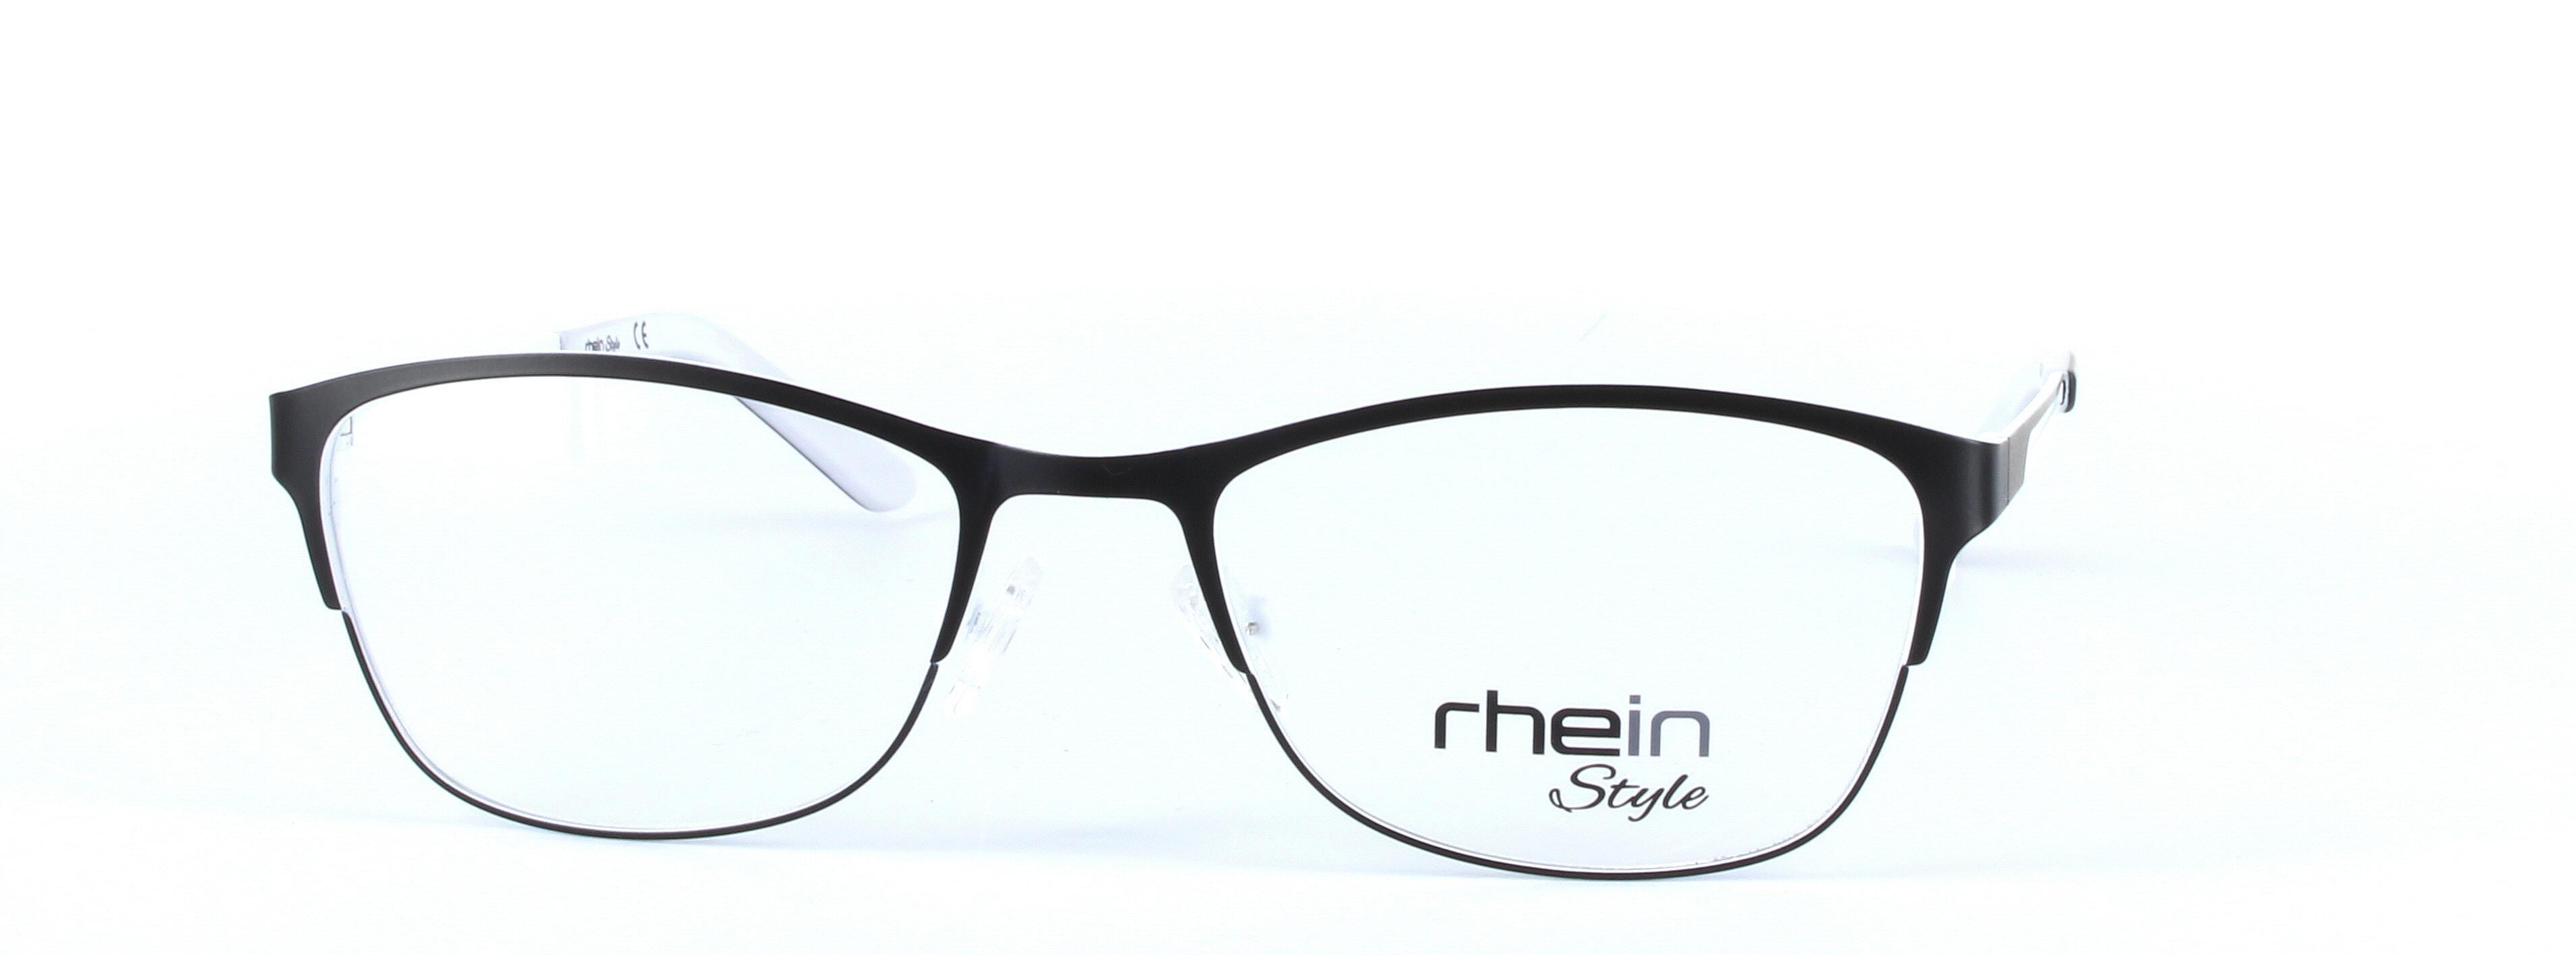 Cooper Black Full Rim Oval Rectangular Metal Glasses - Image View 5